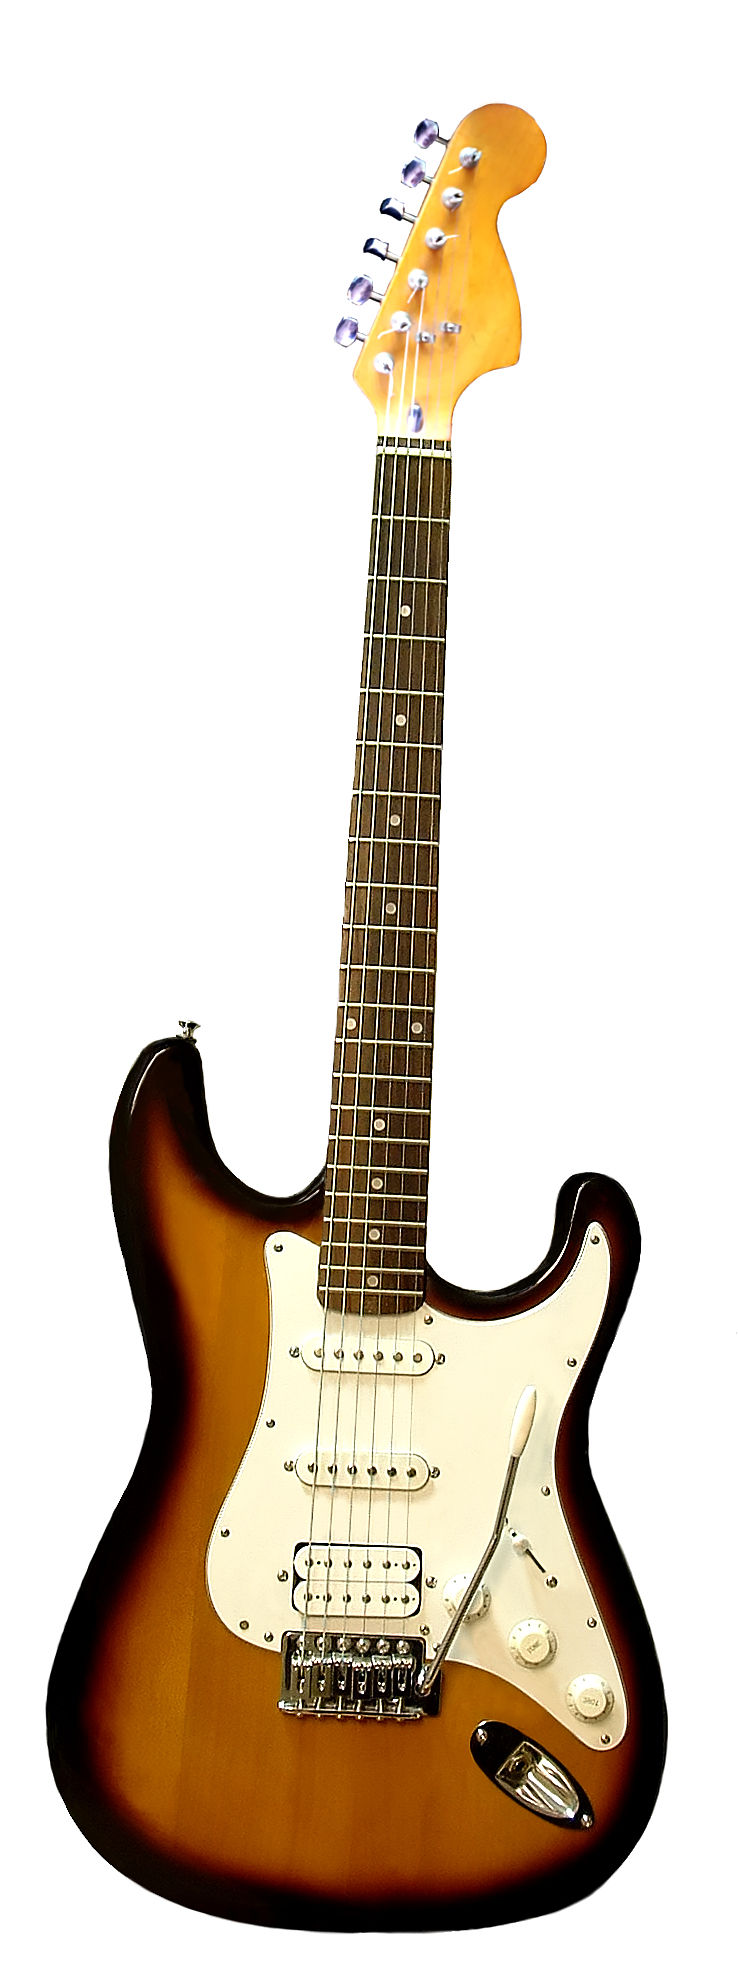 Strutocaster Guitar